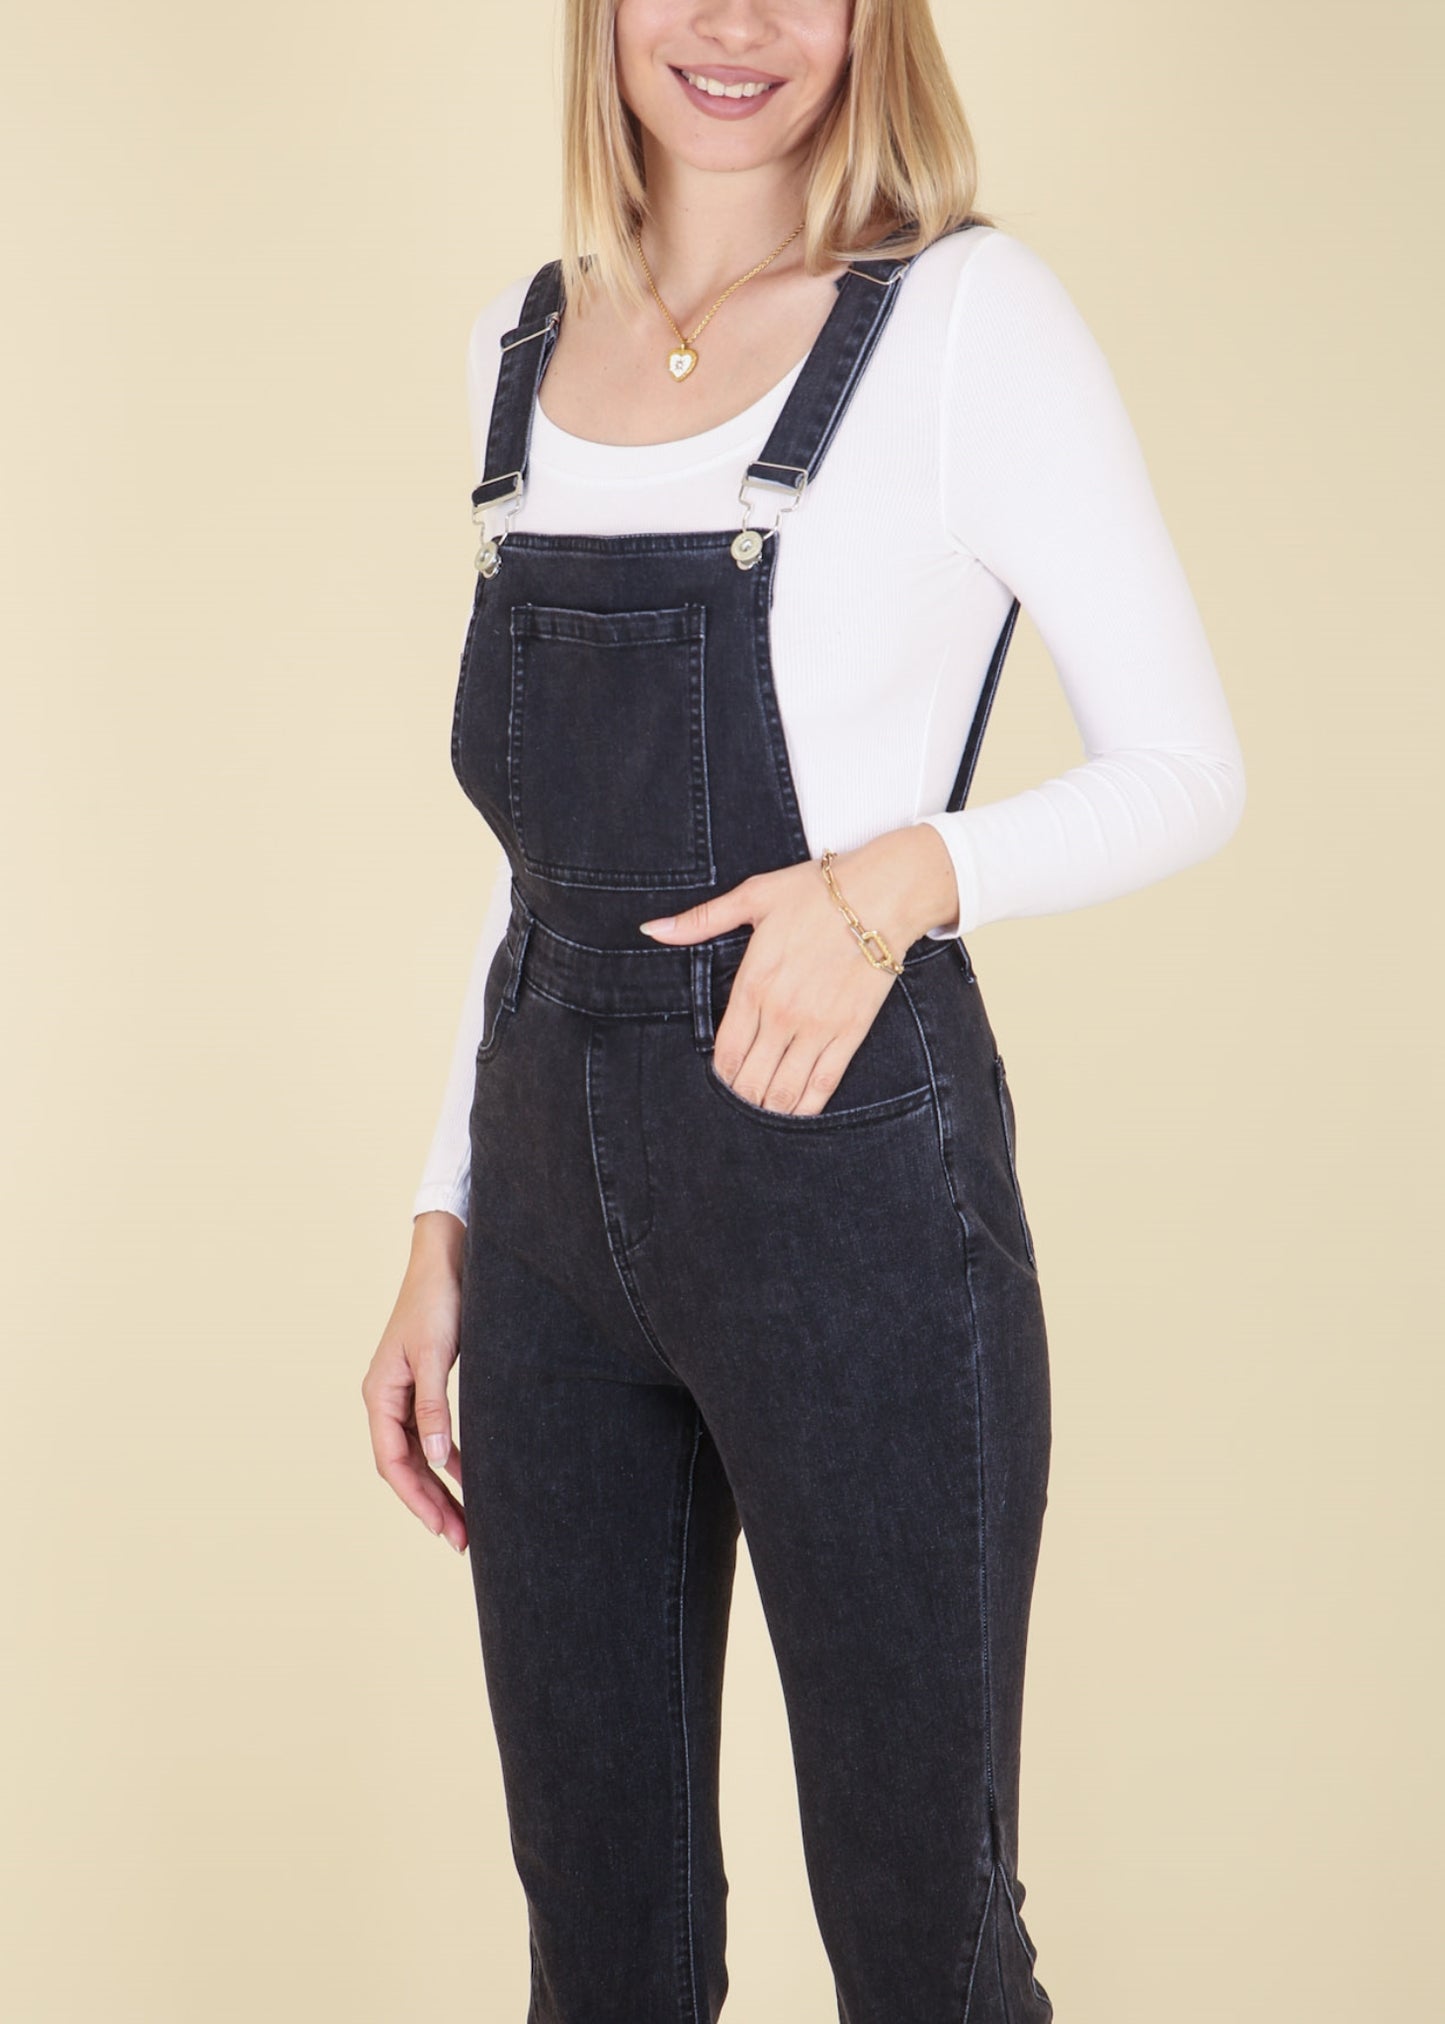 Anna-Kaci Women's Flare Overalls Jumpsuits Retro Bell Bottom Jeans Skinny Denim Overalls